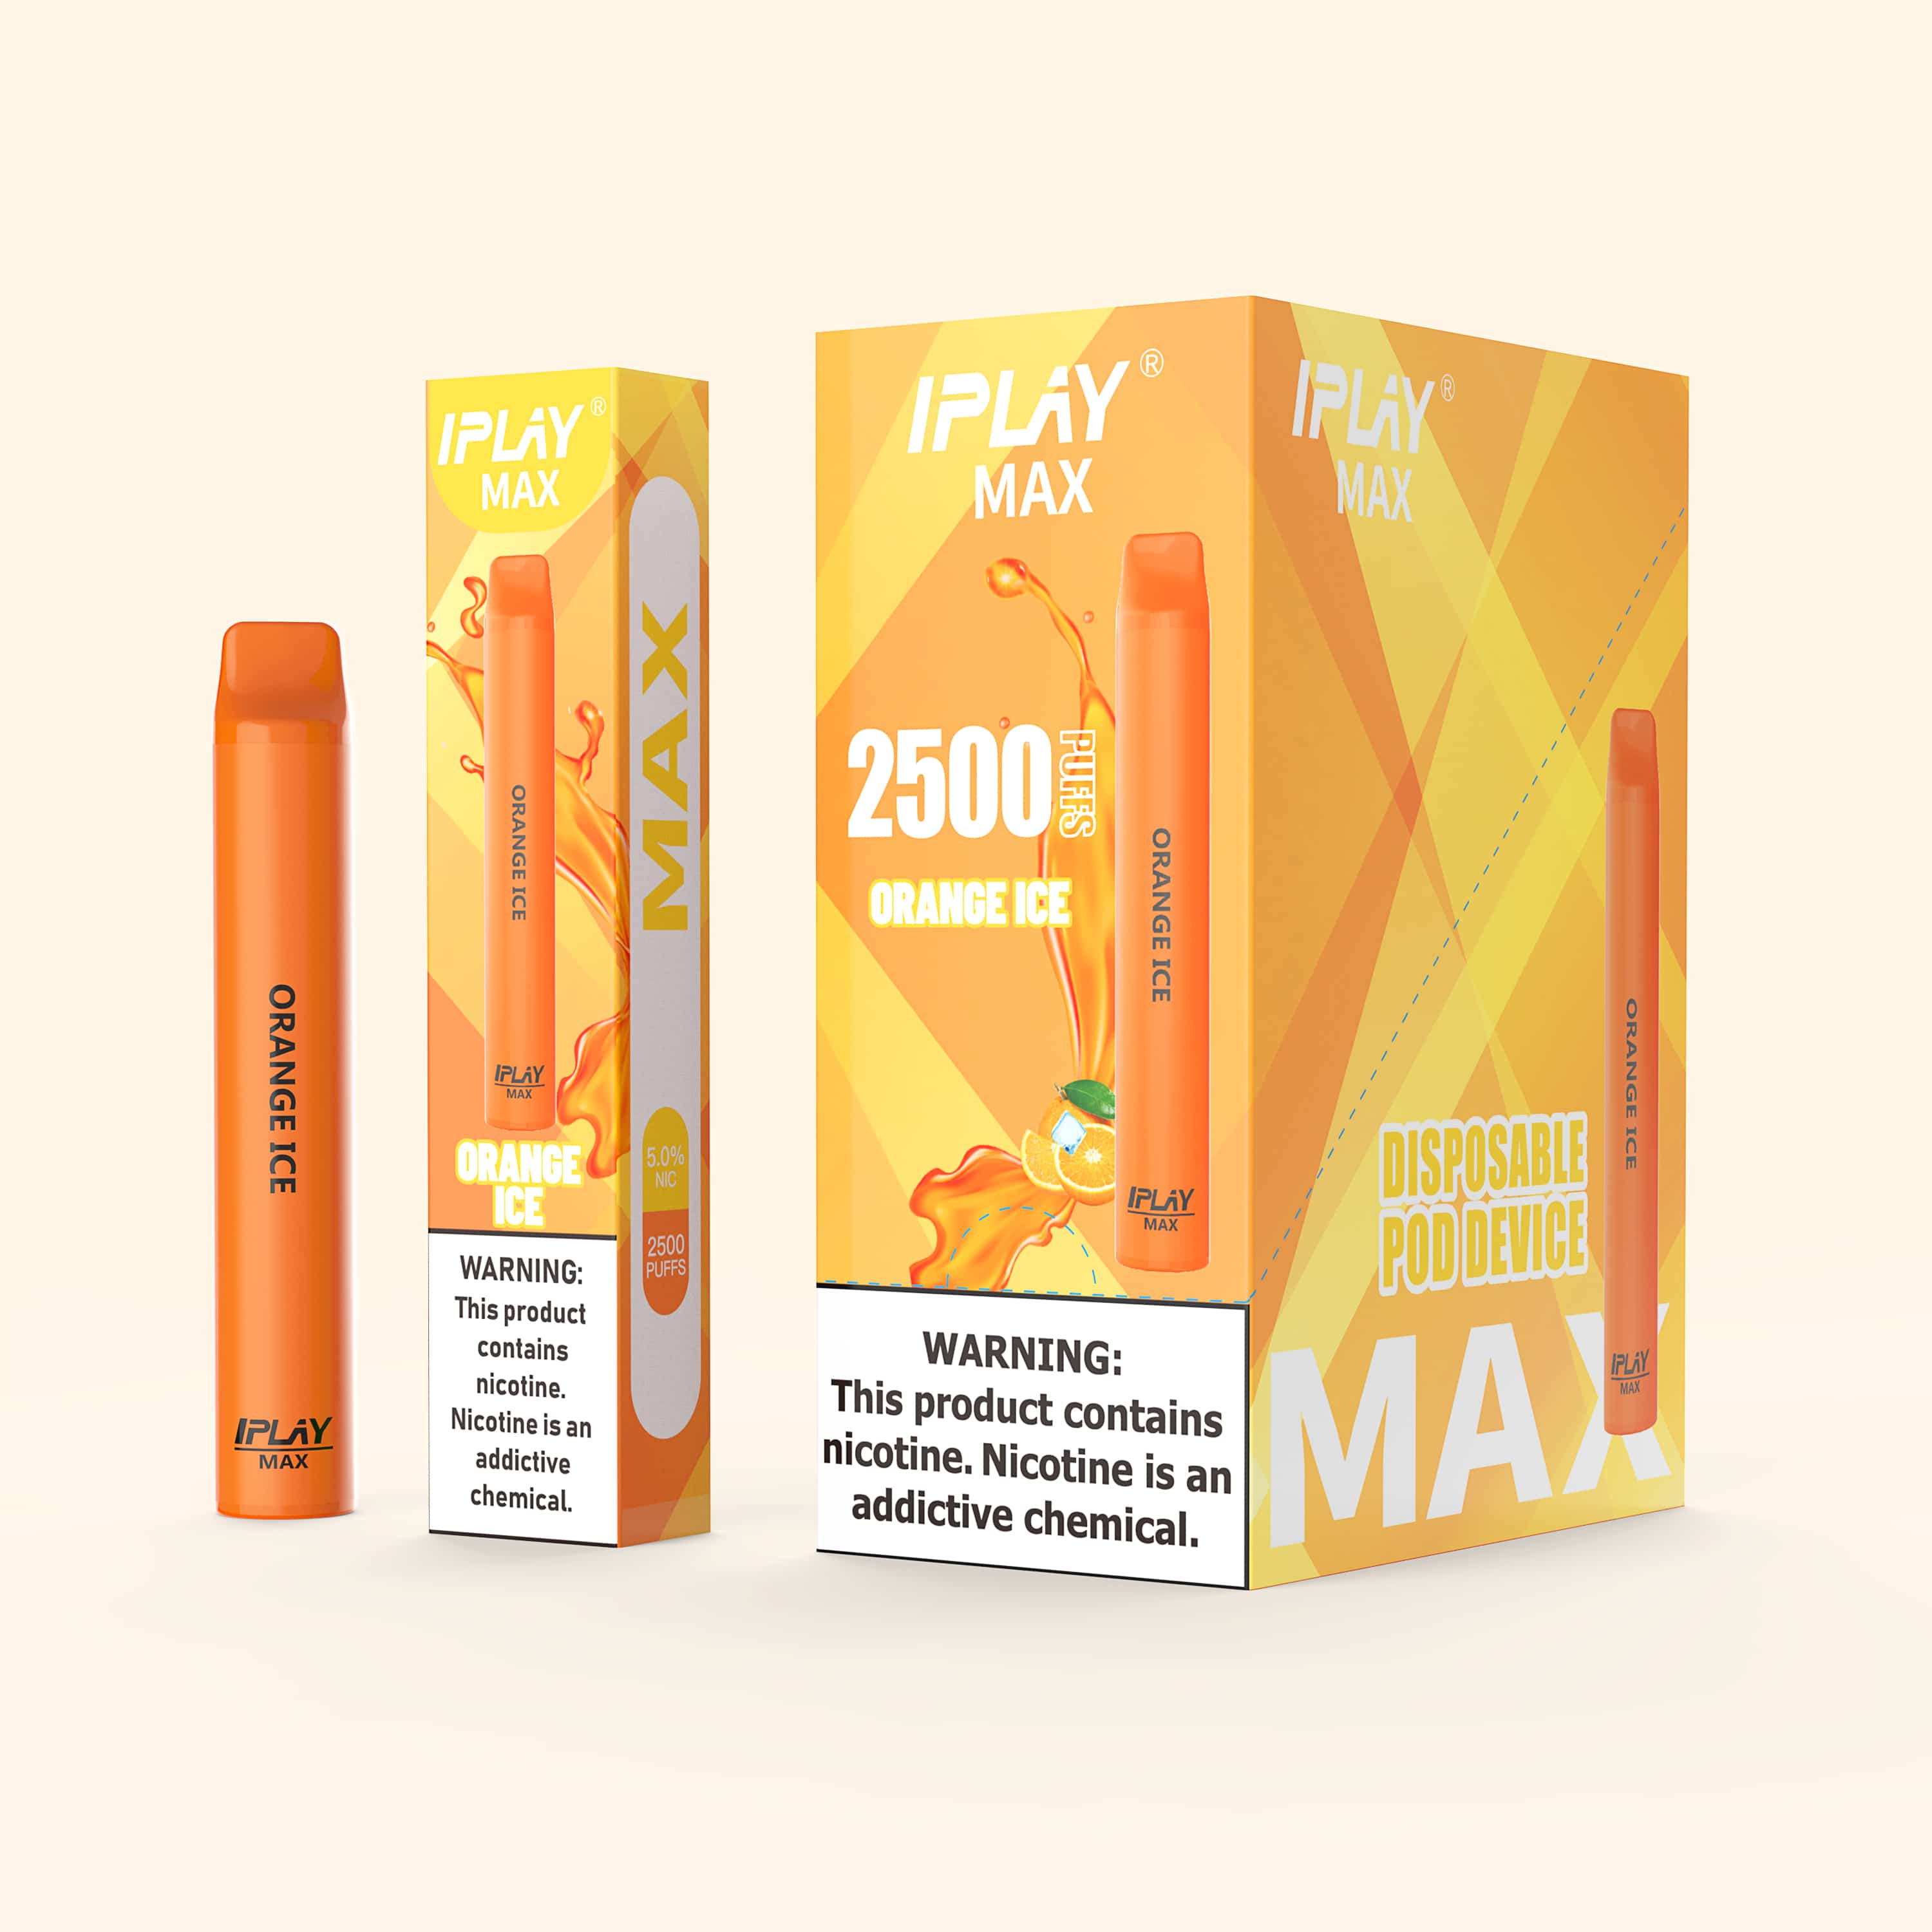 Vape iPlay Max Orange Ice